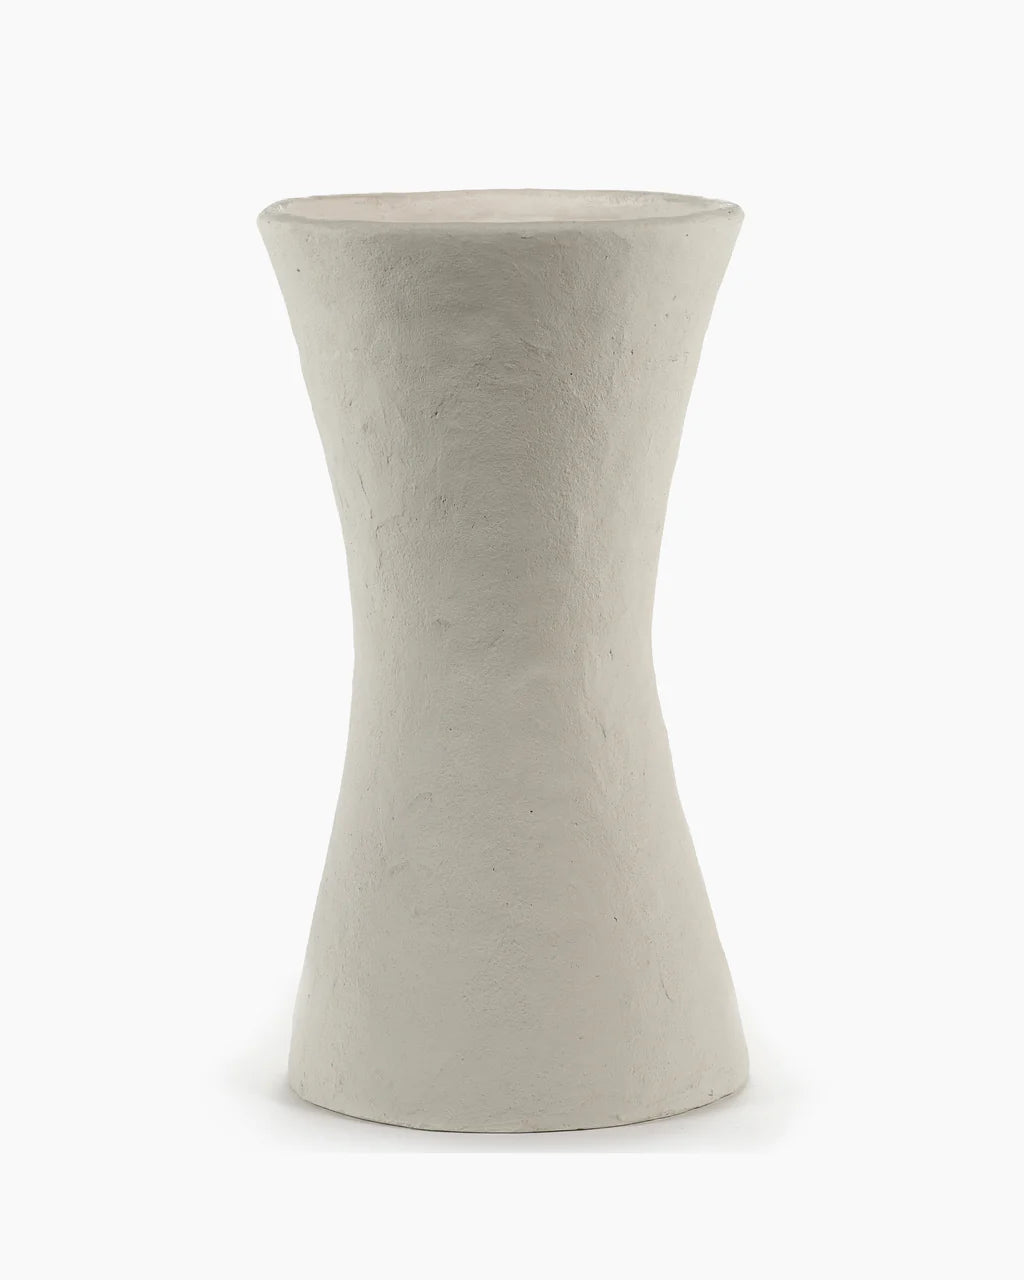 Earth paper mache vase by Marie Michielssen large